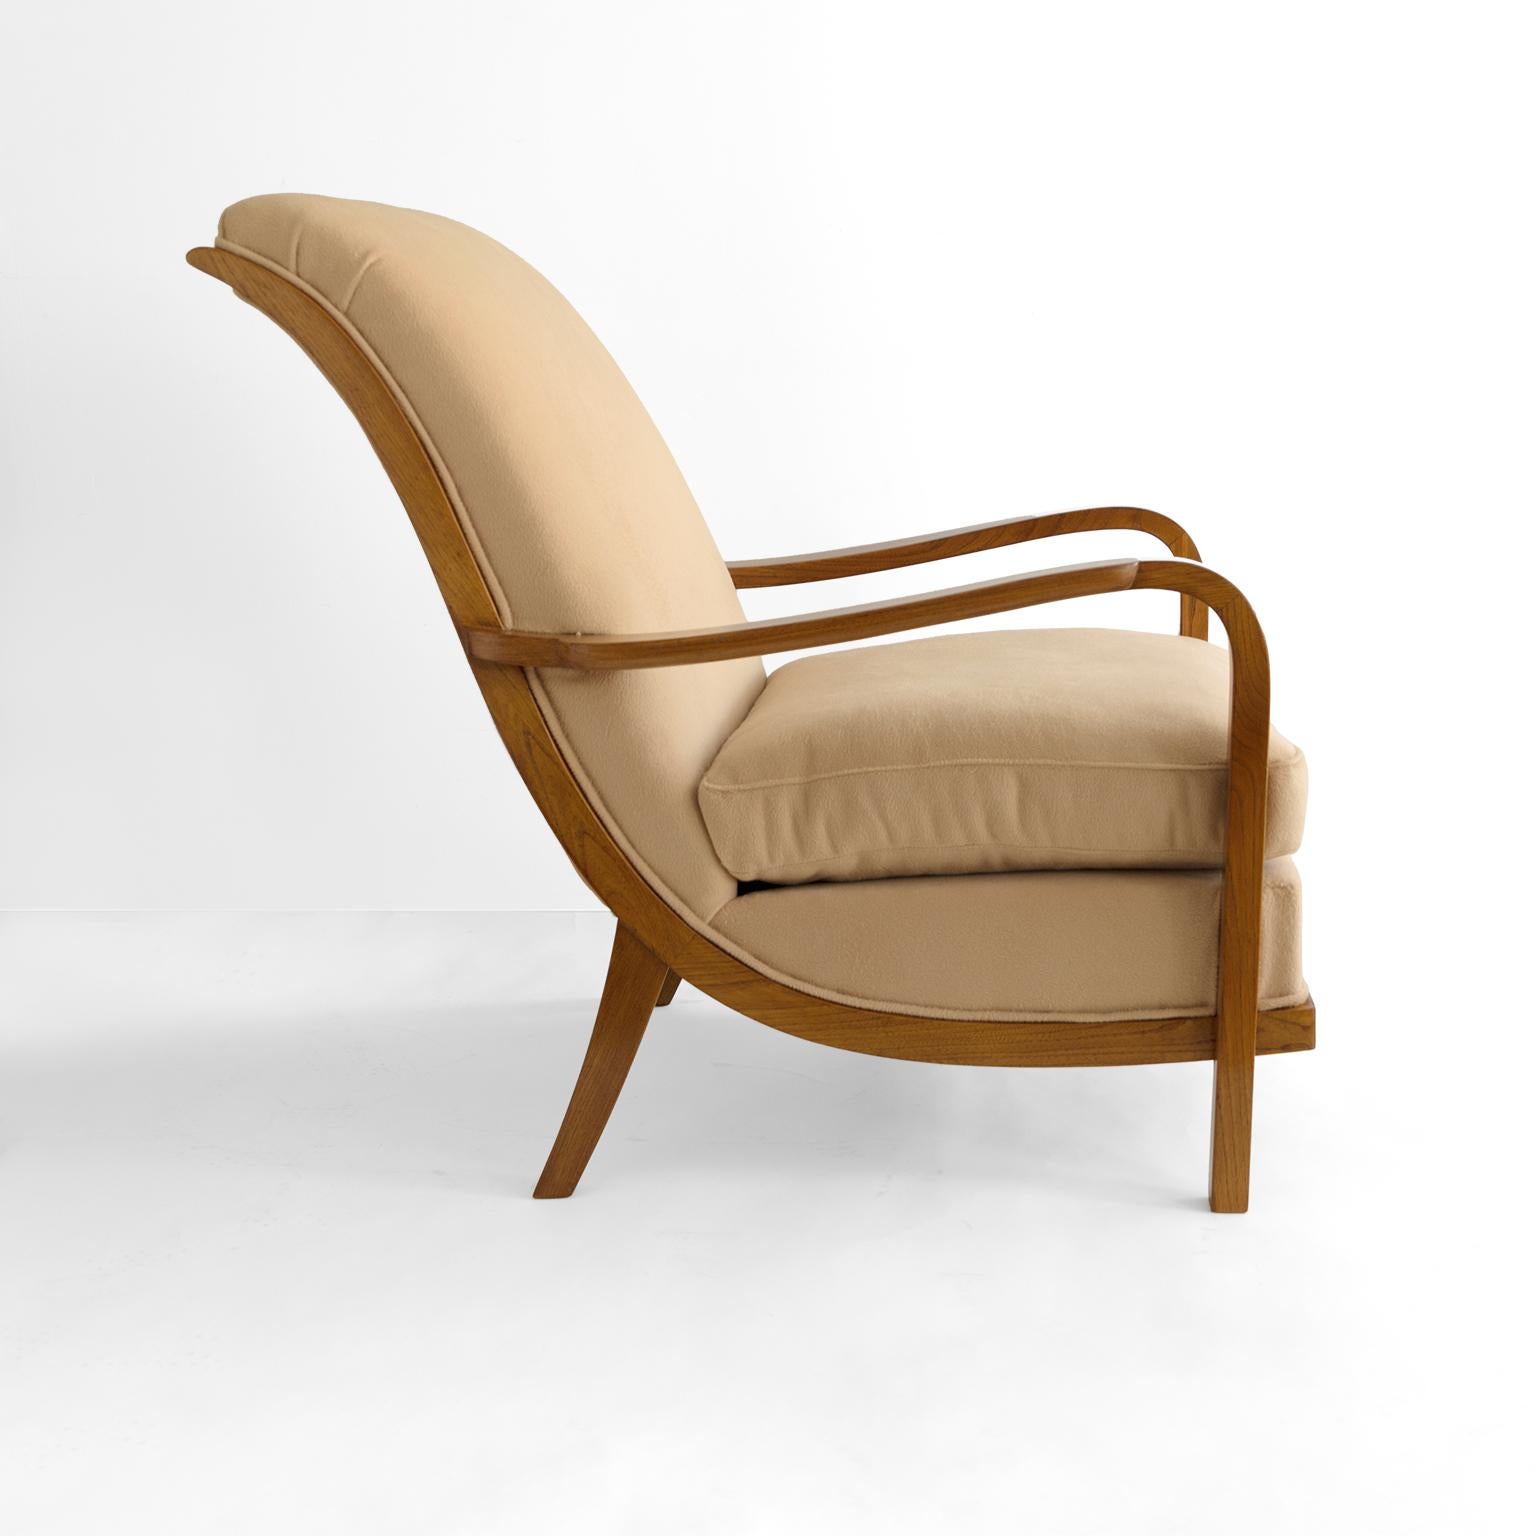 Scandinavian Modern Swedish Art Deco lounge chair by Wilhelm Knoll, Malmo 1933 For Sale